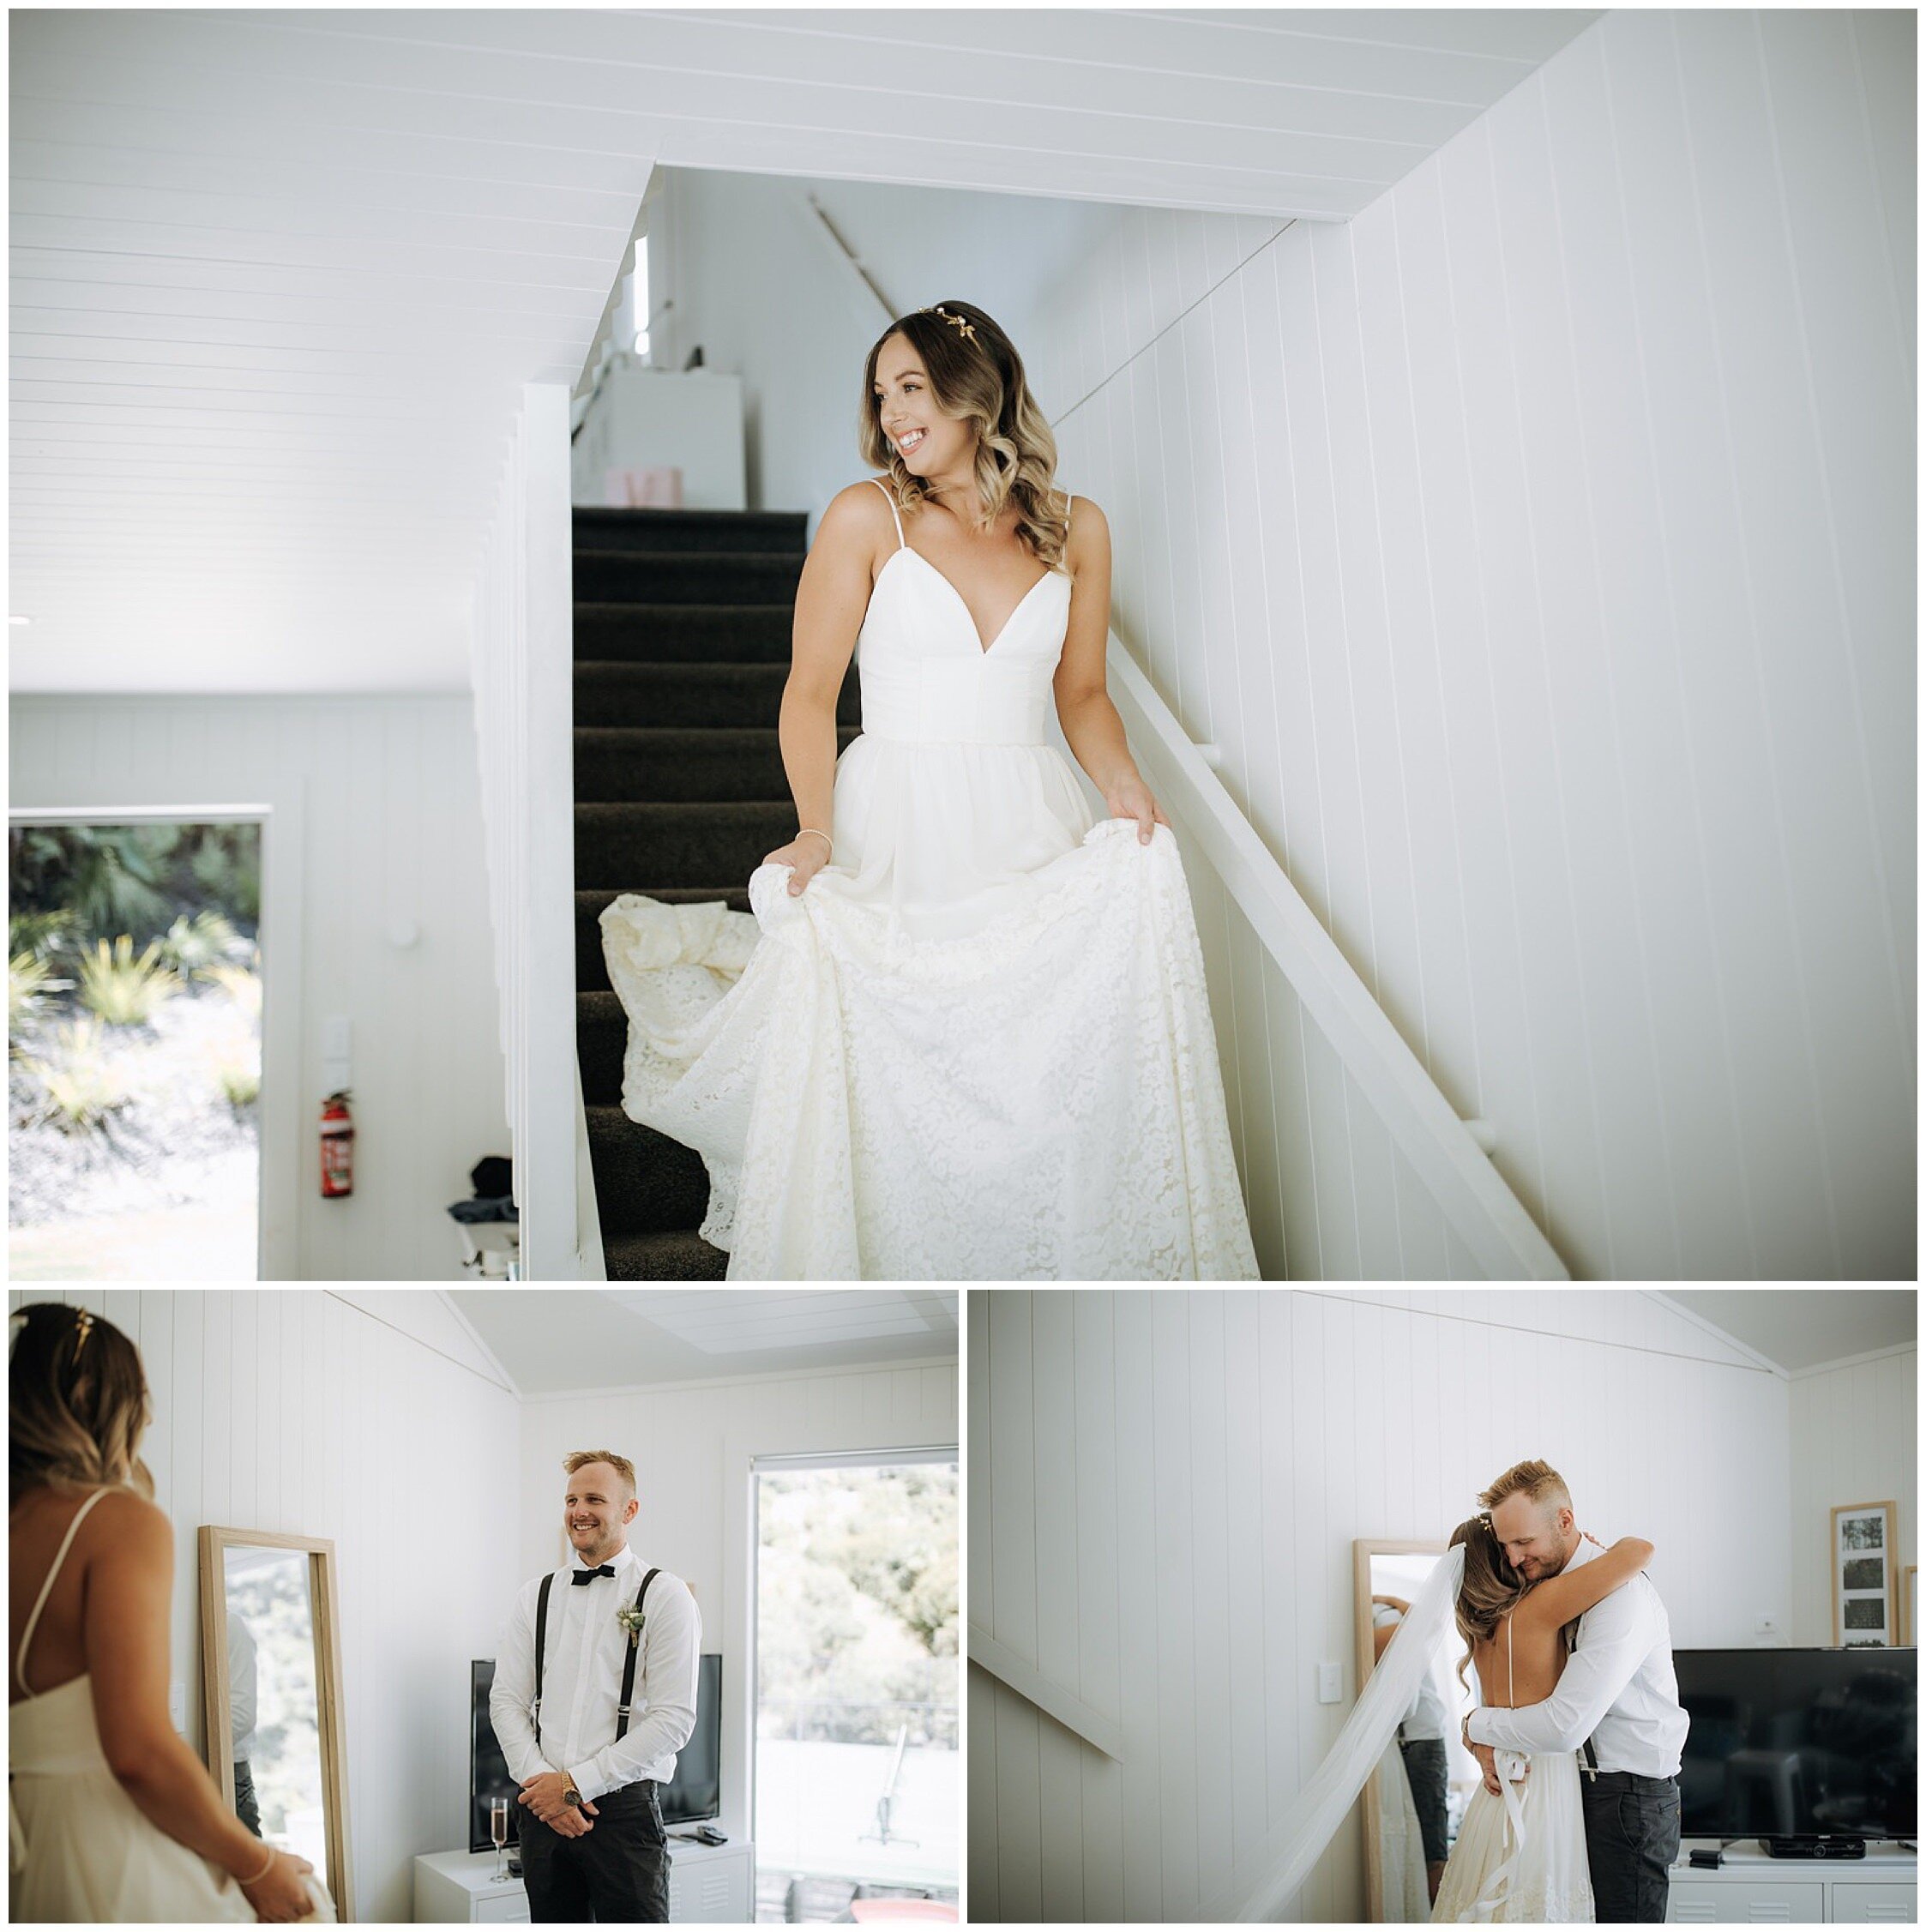 Zanda+Auckland+wedding+photographer+boho+retro+suspenders+groom+denim+jacket+bride+Te+Whai+Bay+Wines+venue+bright+glass+house+vineyard+photoshoot+New+Zealand_12.jpeg